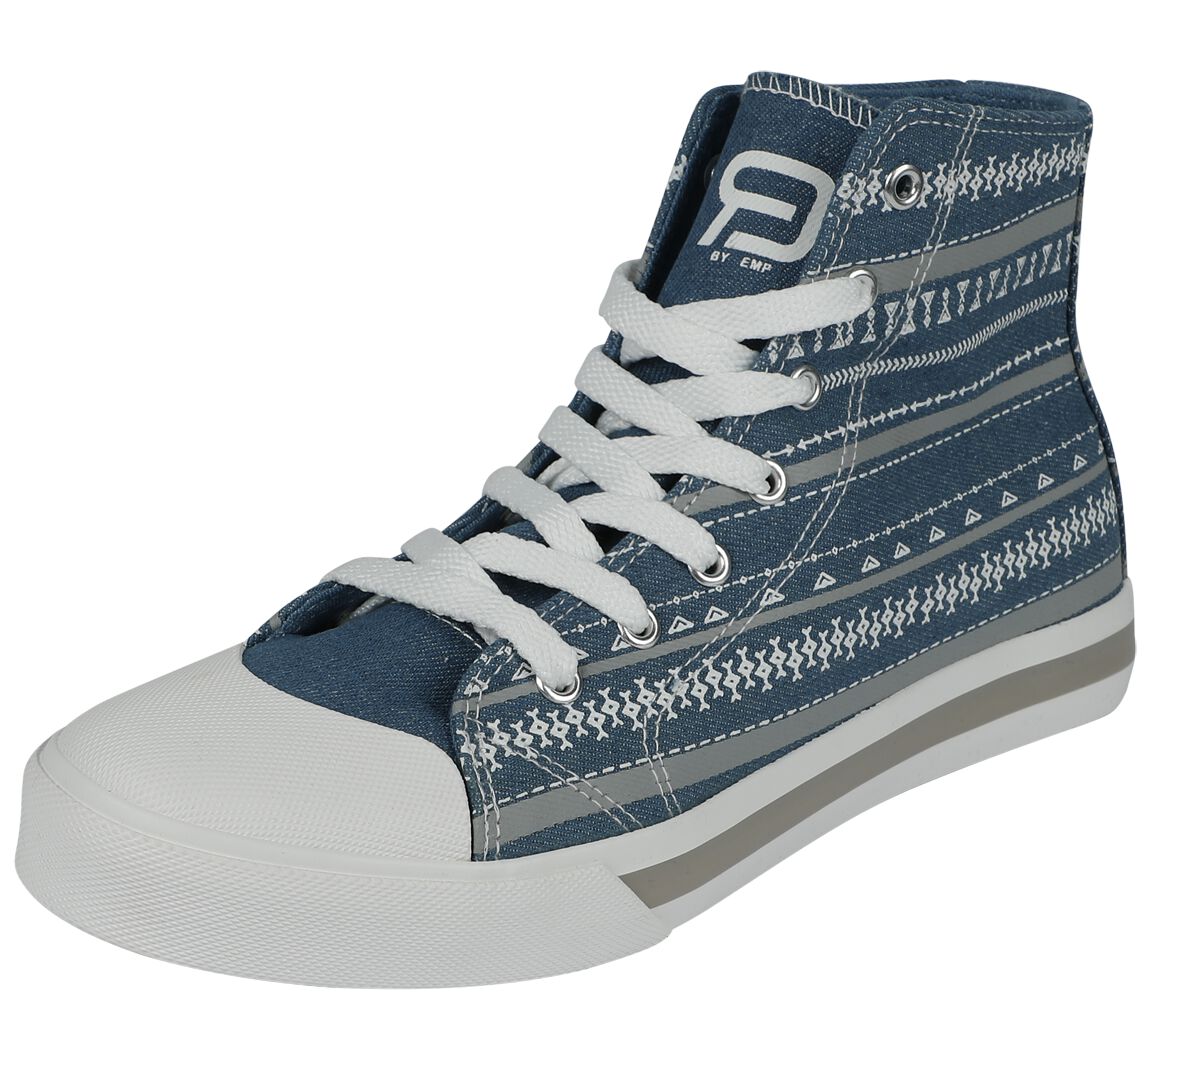 RED by EMP Sneaker with Graphic Ornaments Sneaker high blau grau weiß in EU46